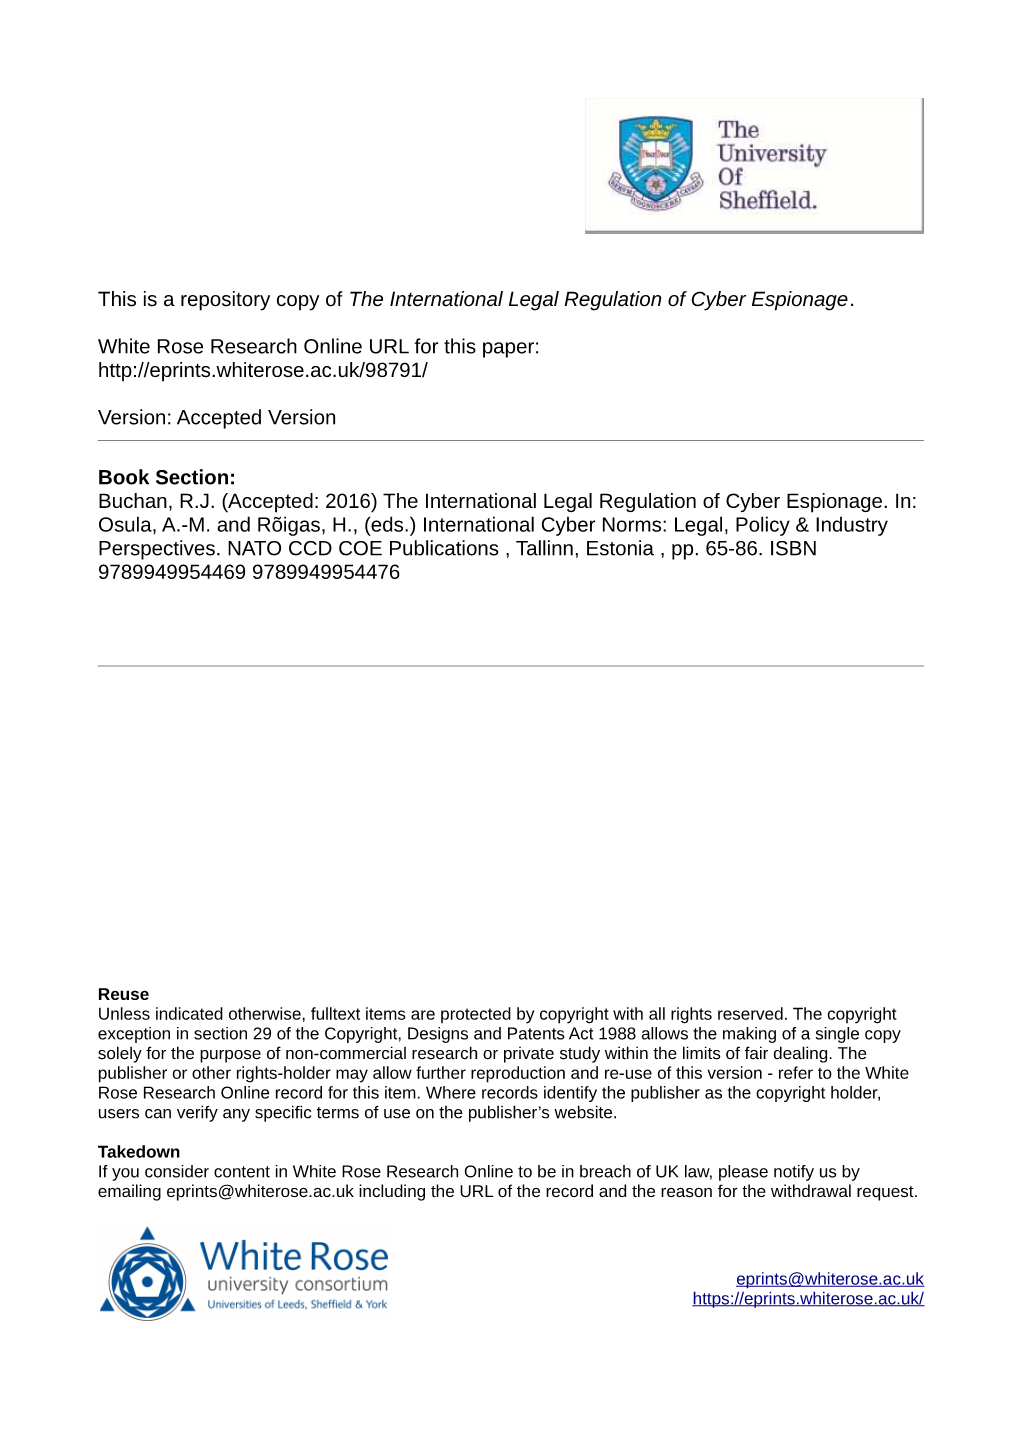 The International Legal Regulation of Cyber Espionage